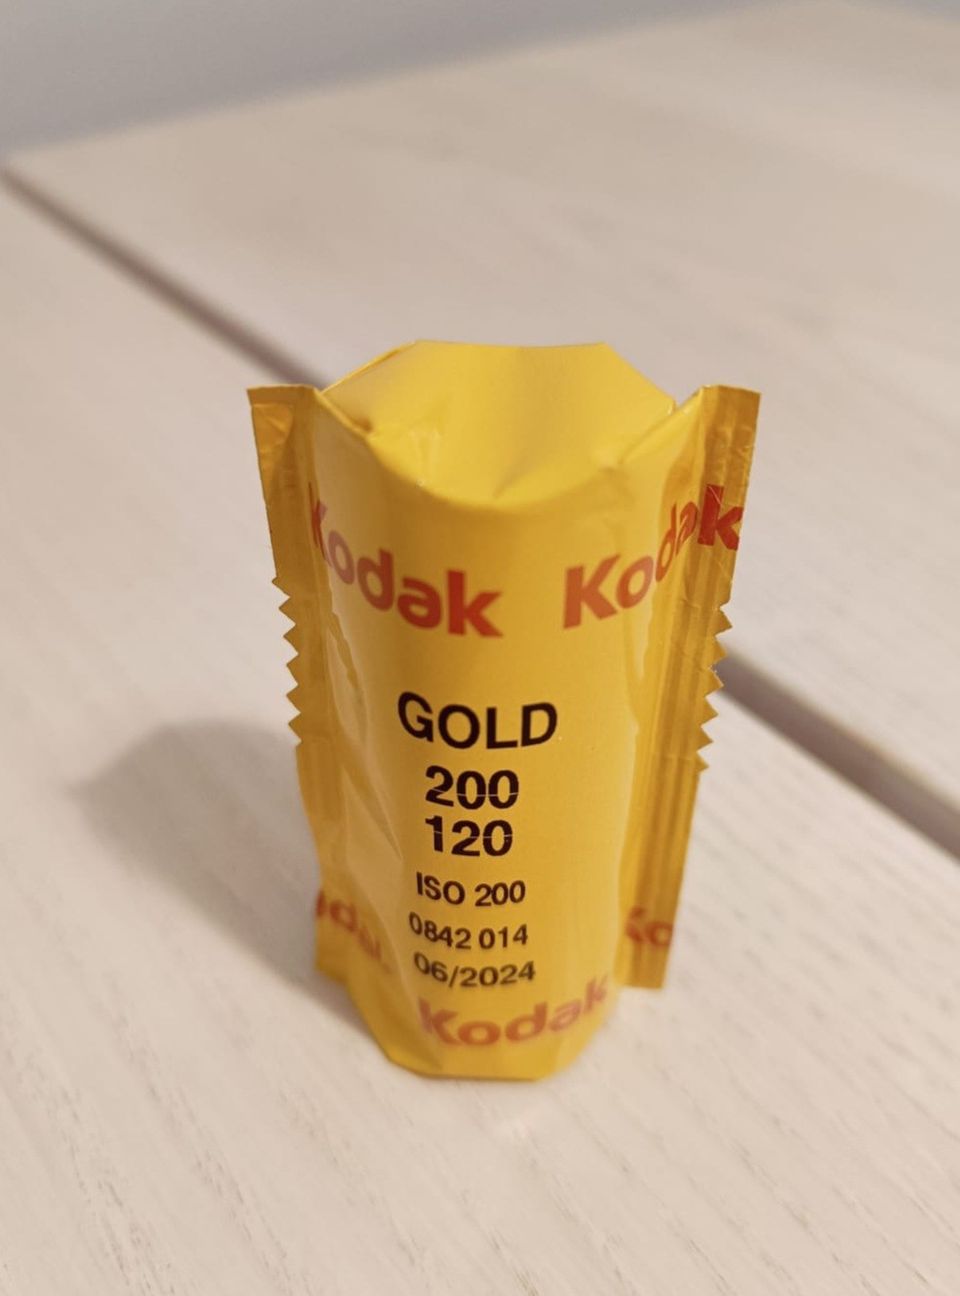 Kodak Gold 200 (120)